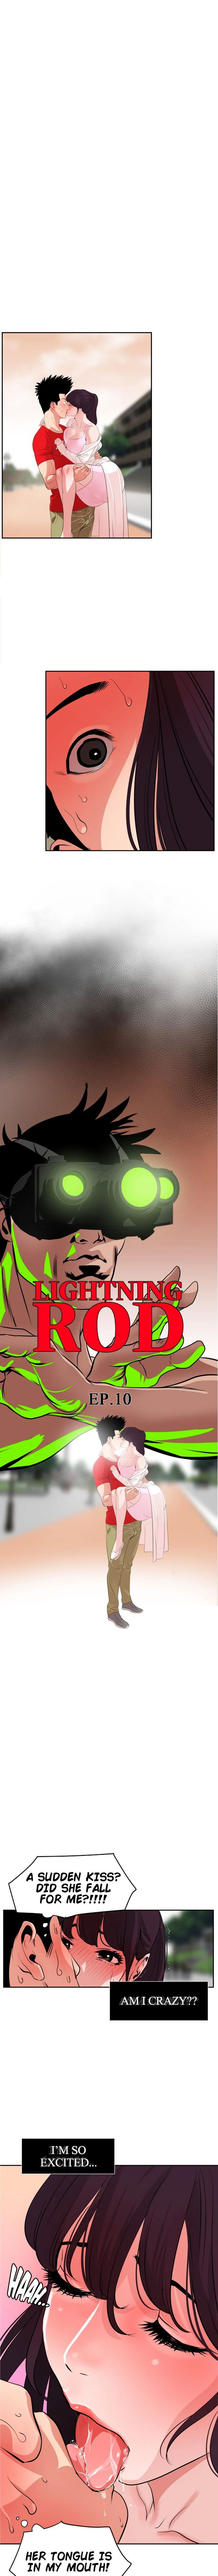 lightning-rod-chap-10-0